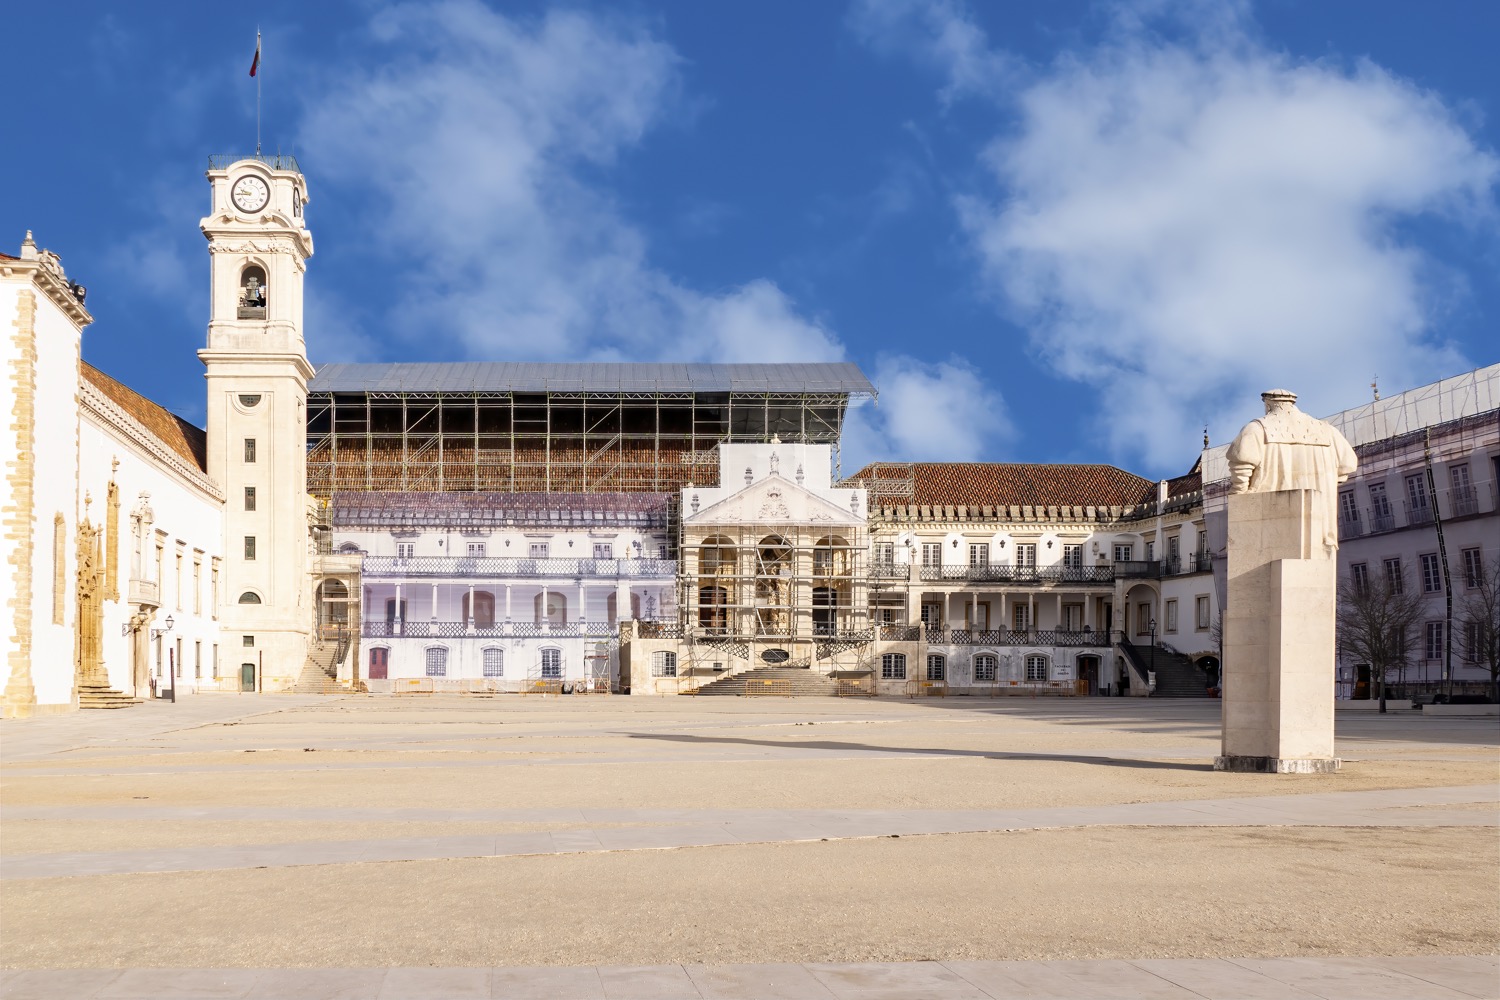 La Universidad de Coimbra